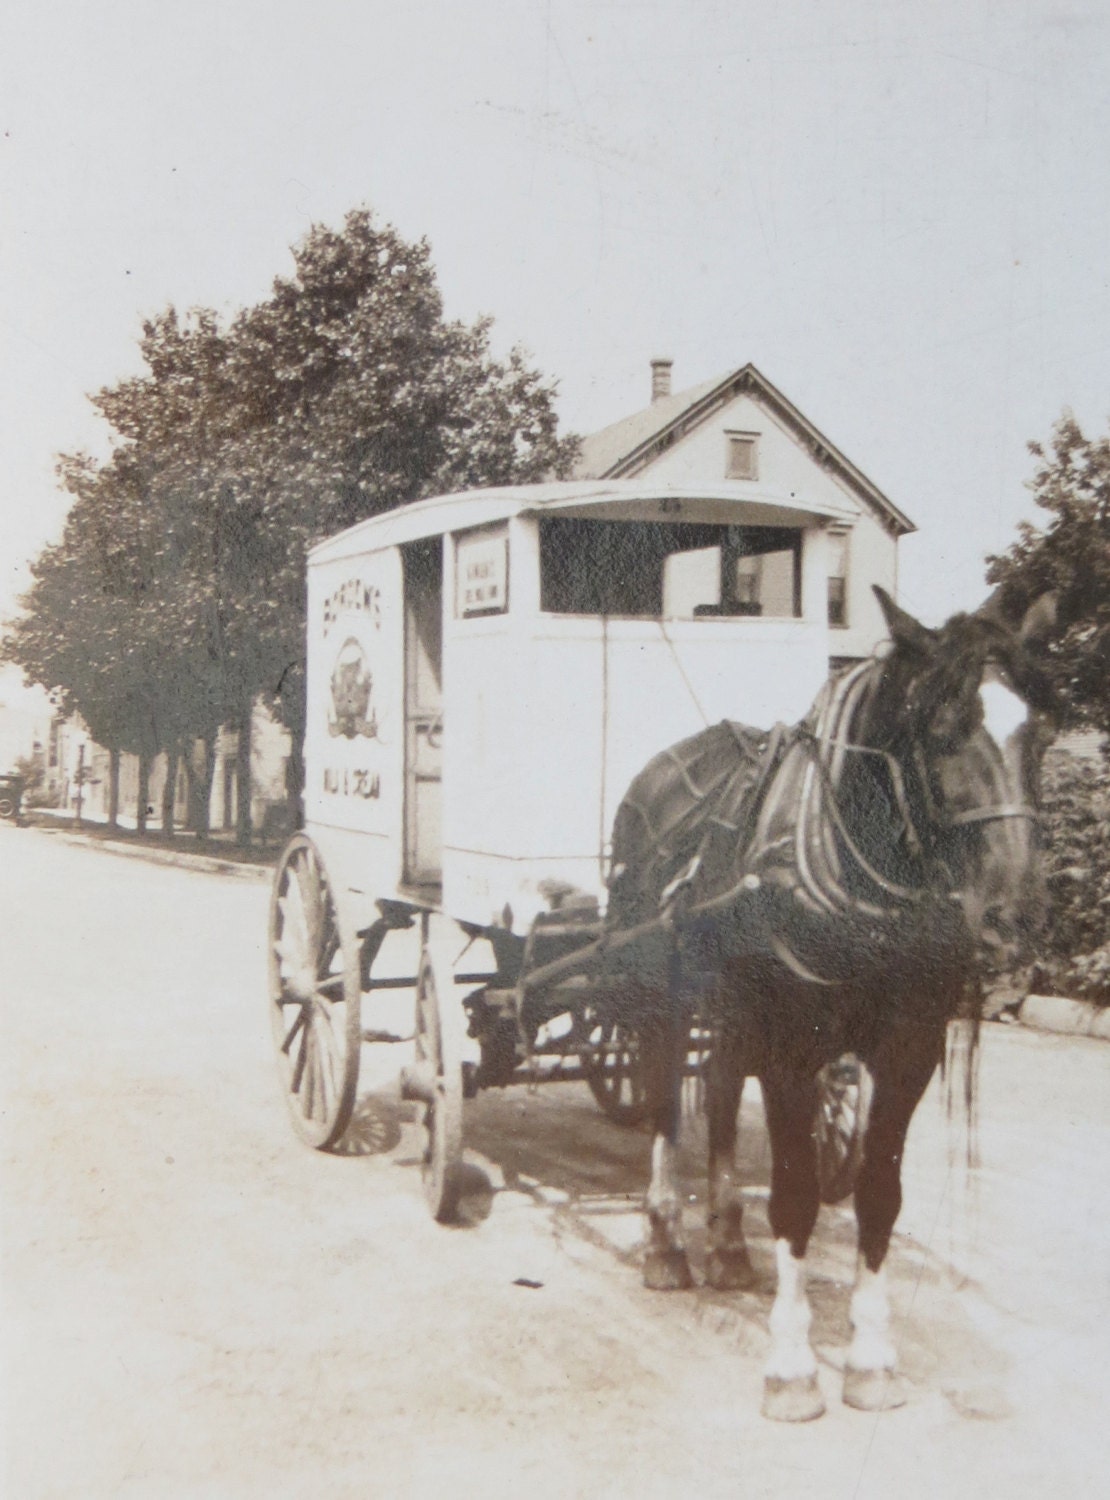 Vintage 1920's Borden's Dairy Horse Drawn Delivery Cart Snapshot Photo - InteriorVintage